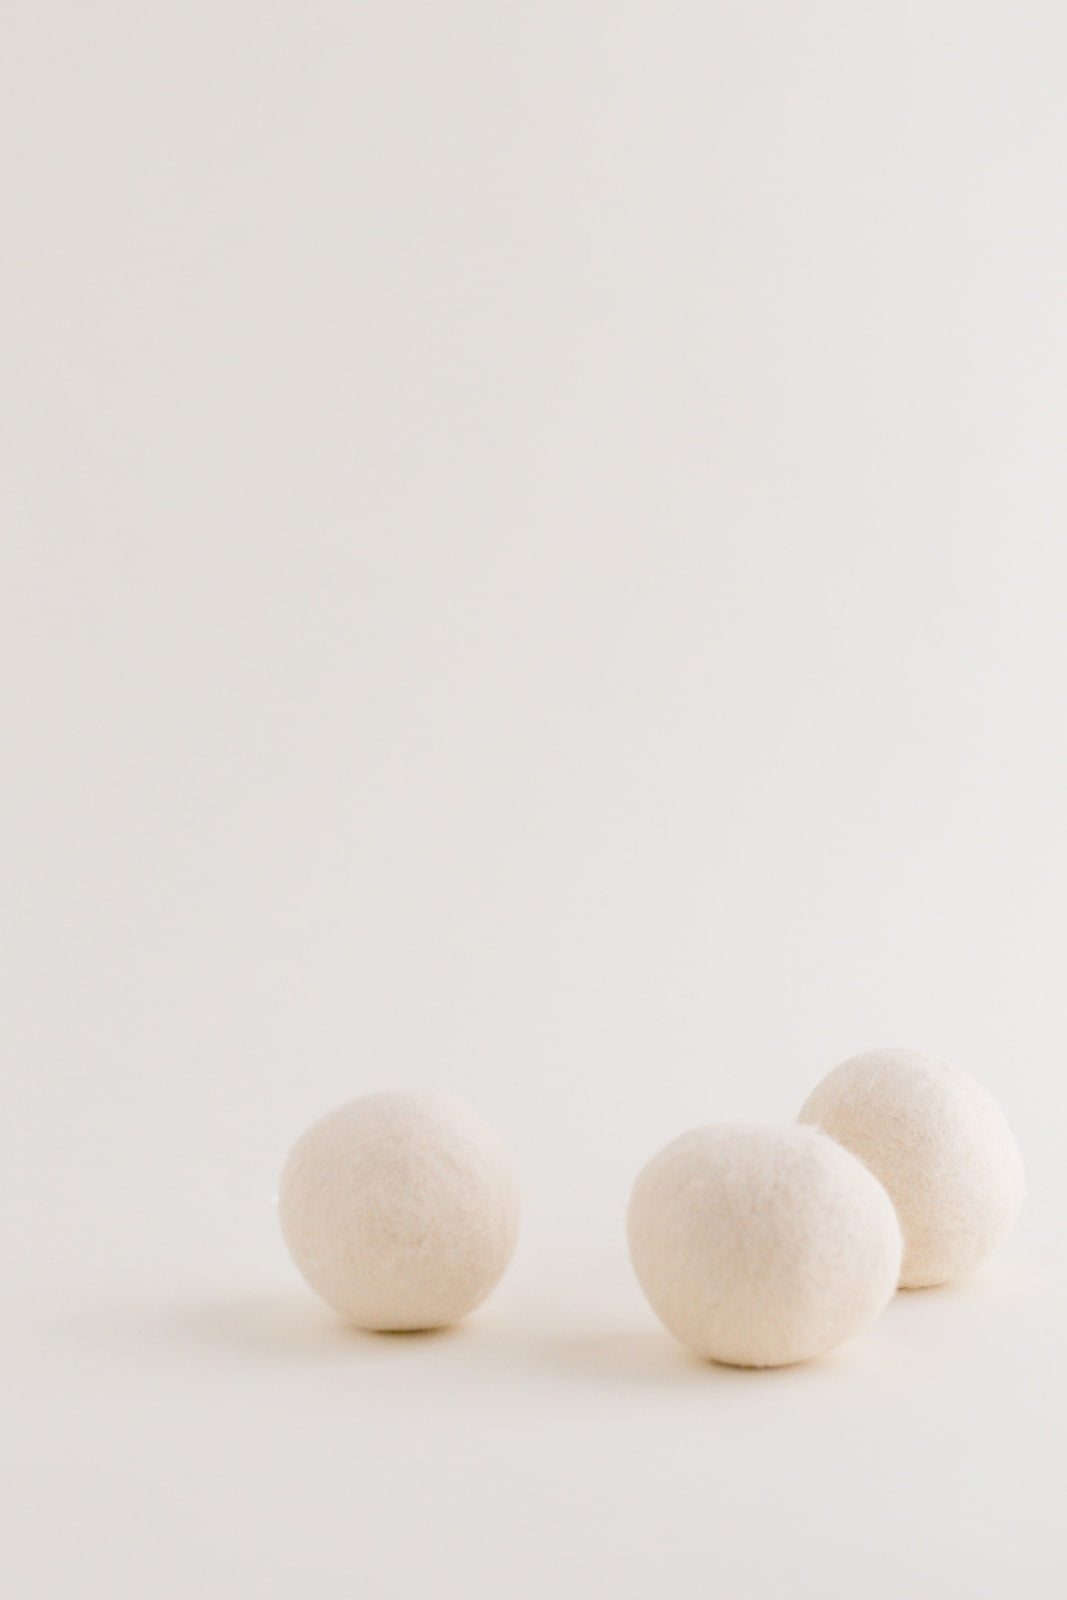 Wool Dryer Balls 3ct